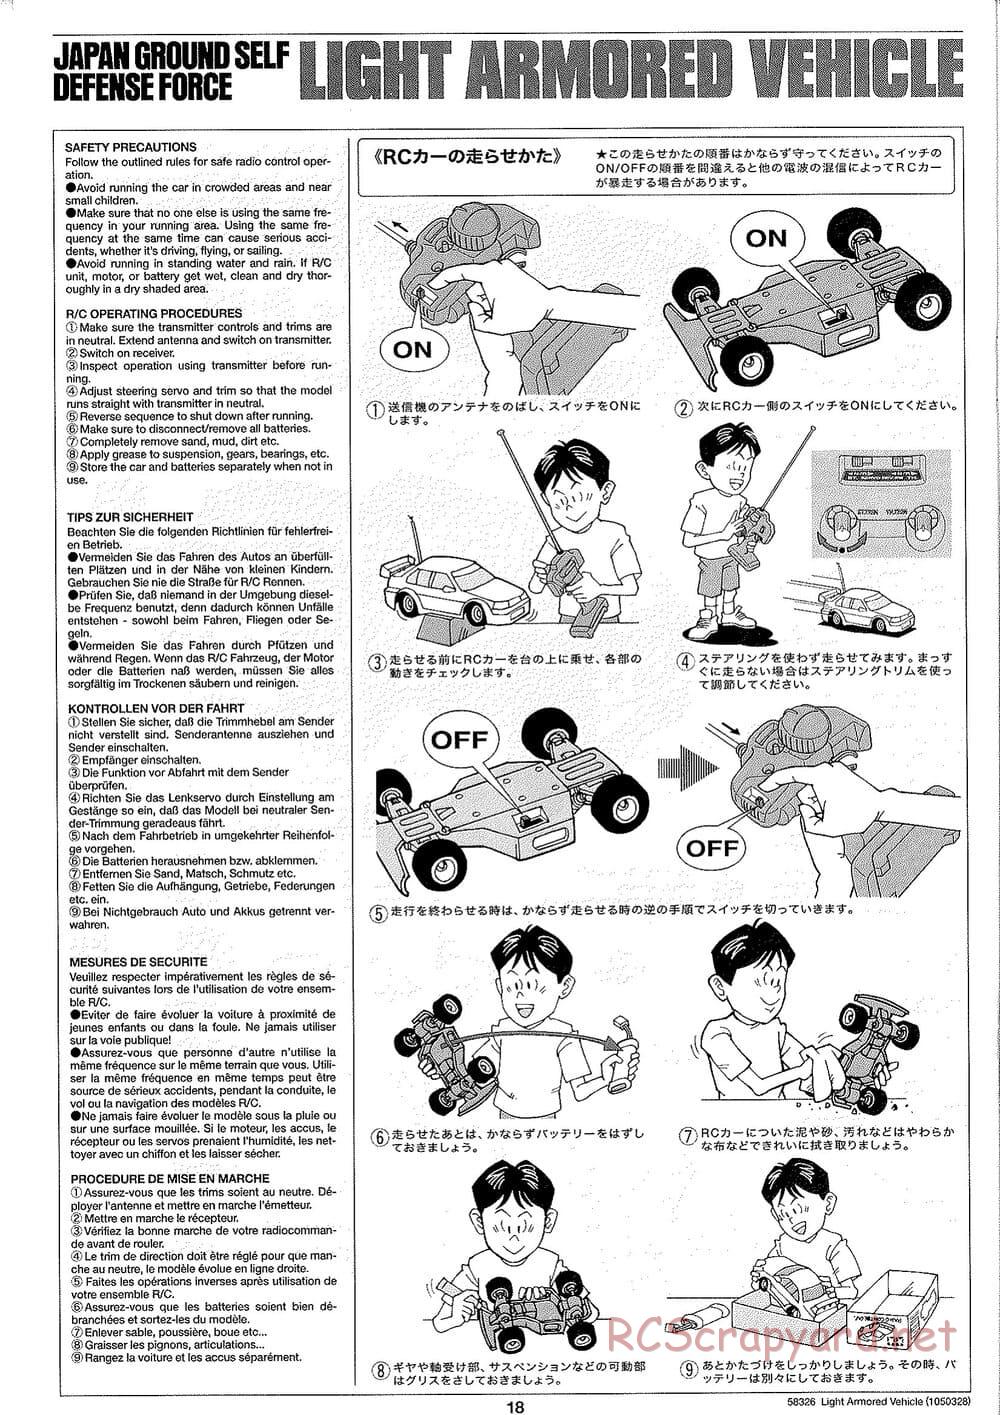 Tamiya - JGSDF Light Armored Vehicle - TA-01 Chassis - Manual - Page 18